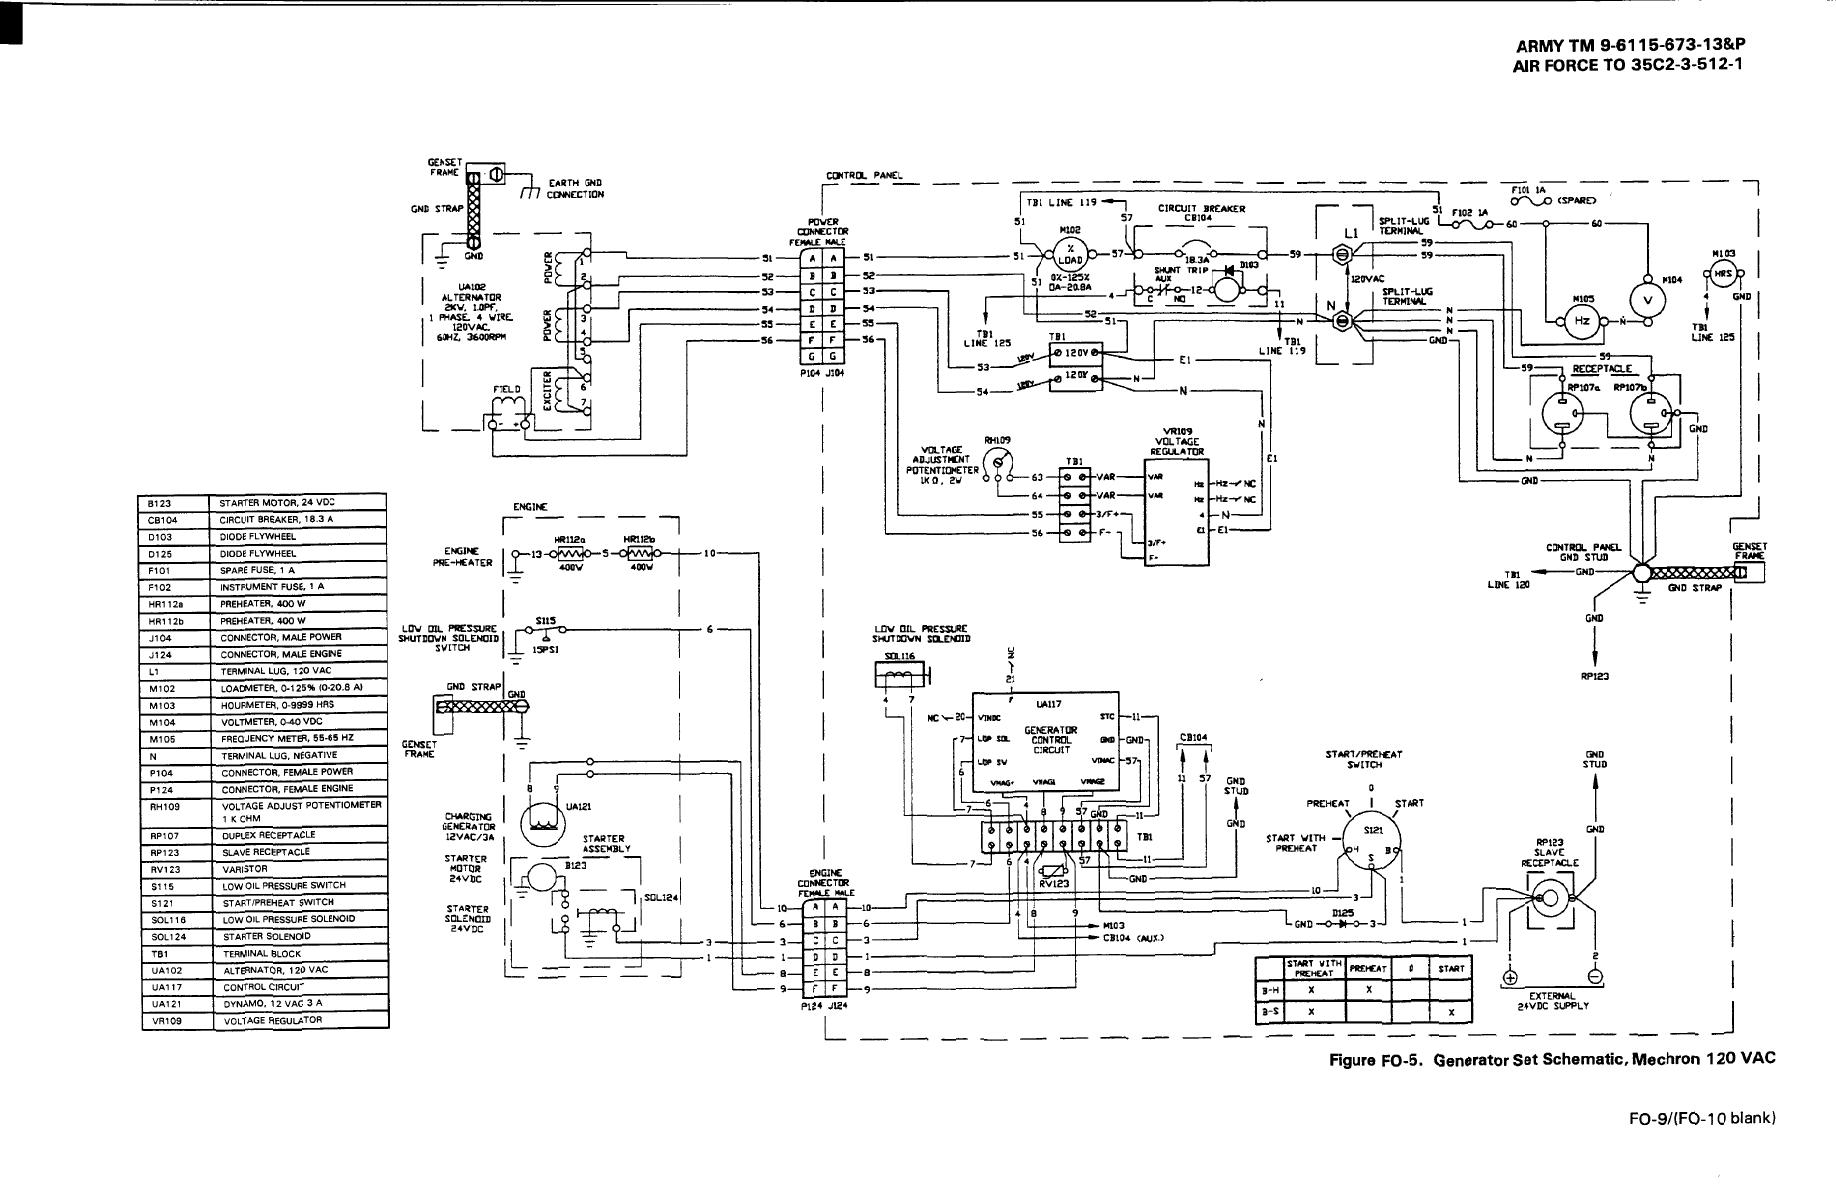 ribu1c wiring diagram